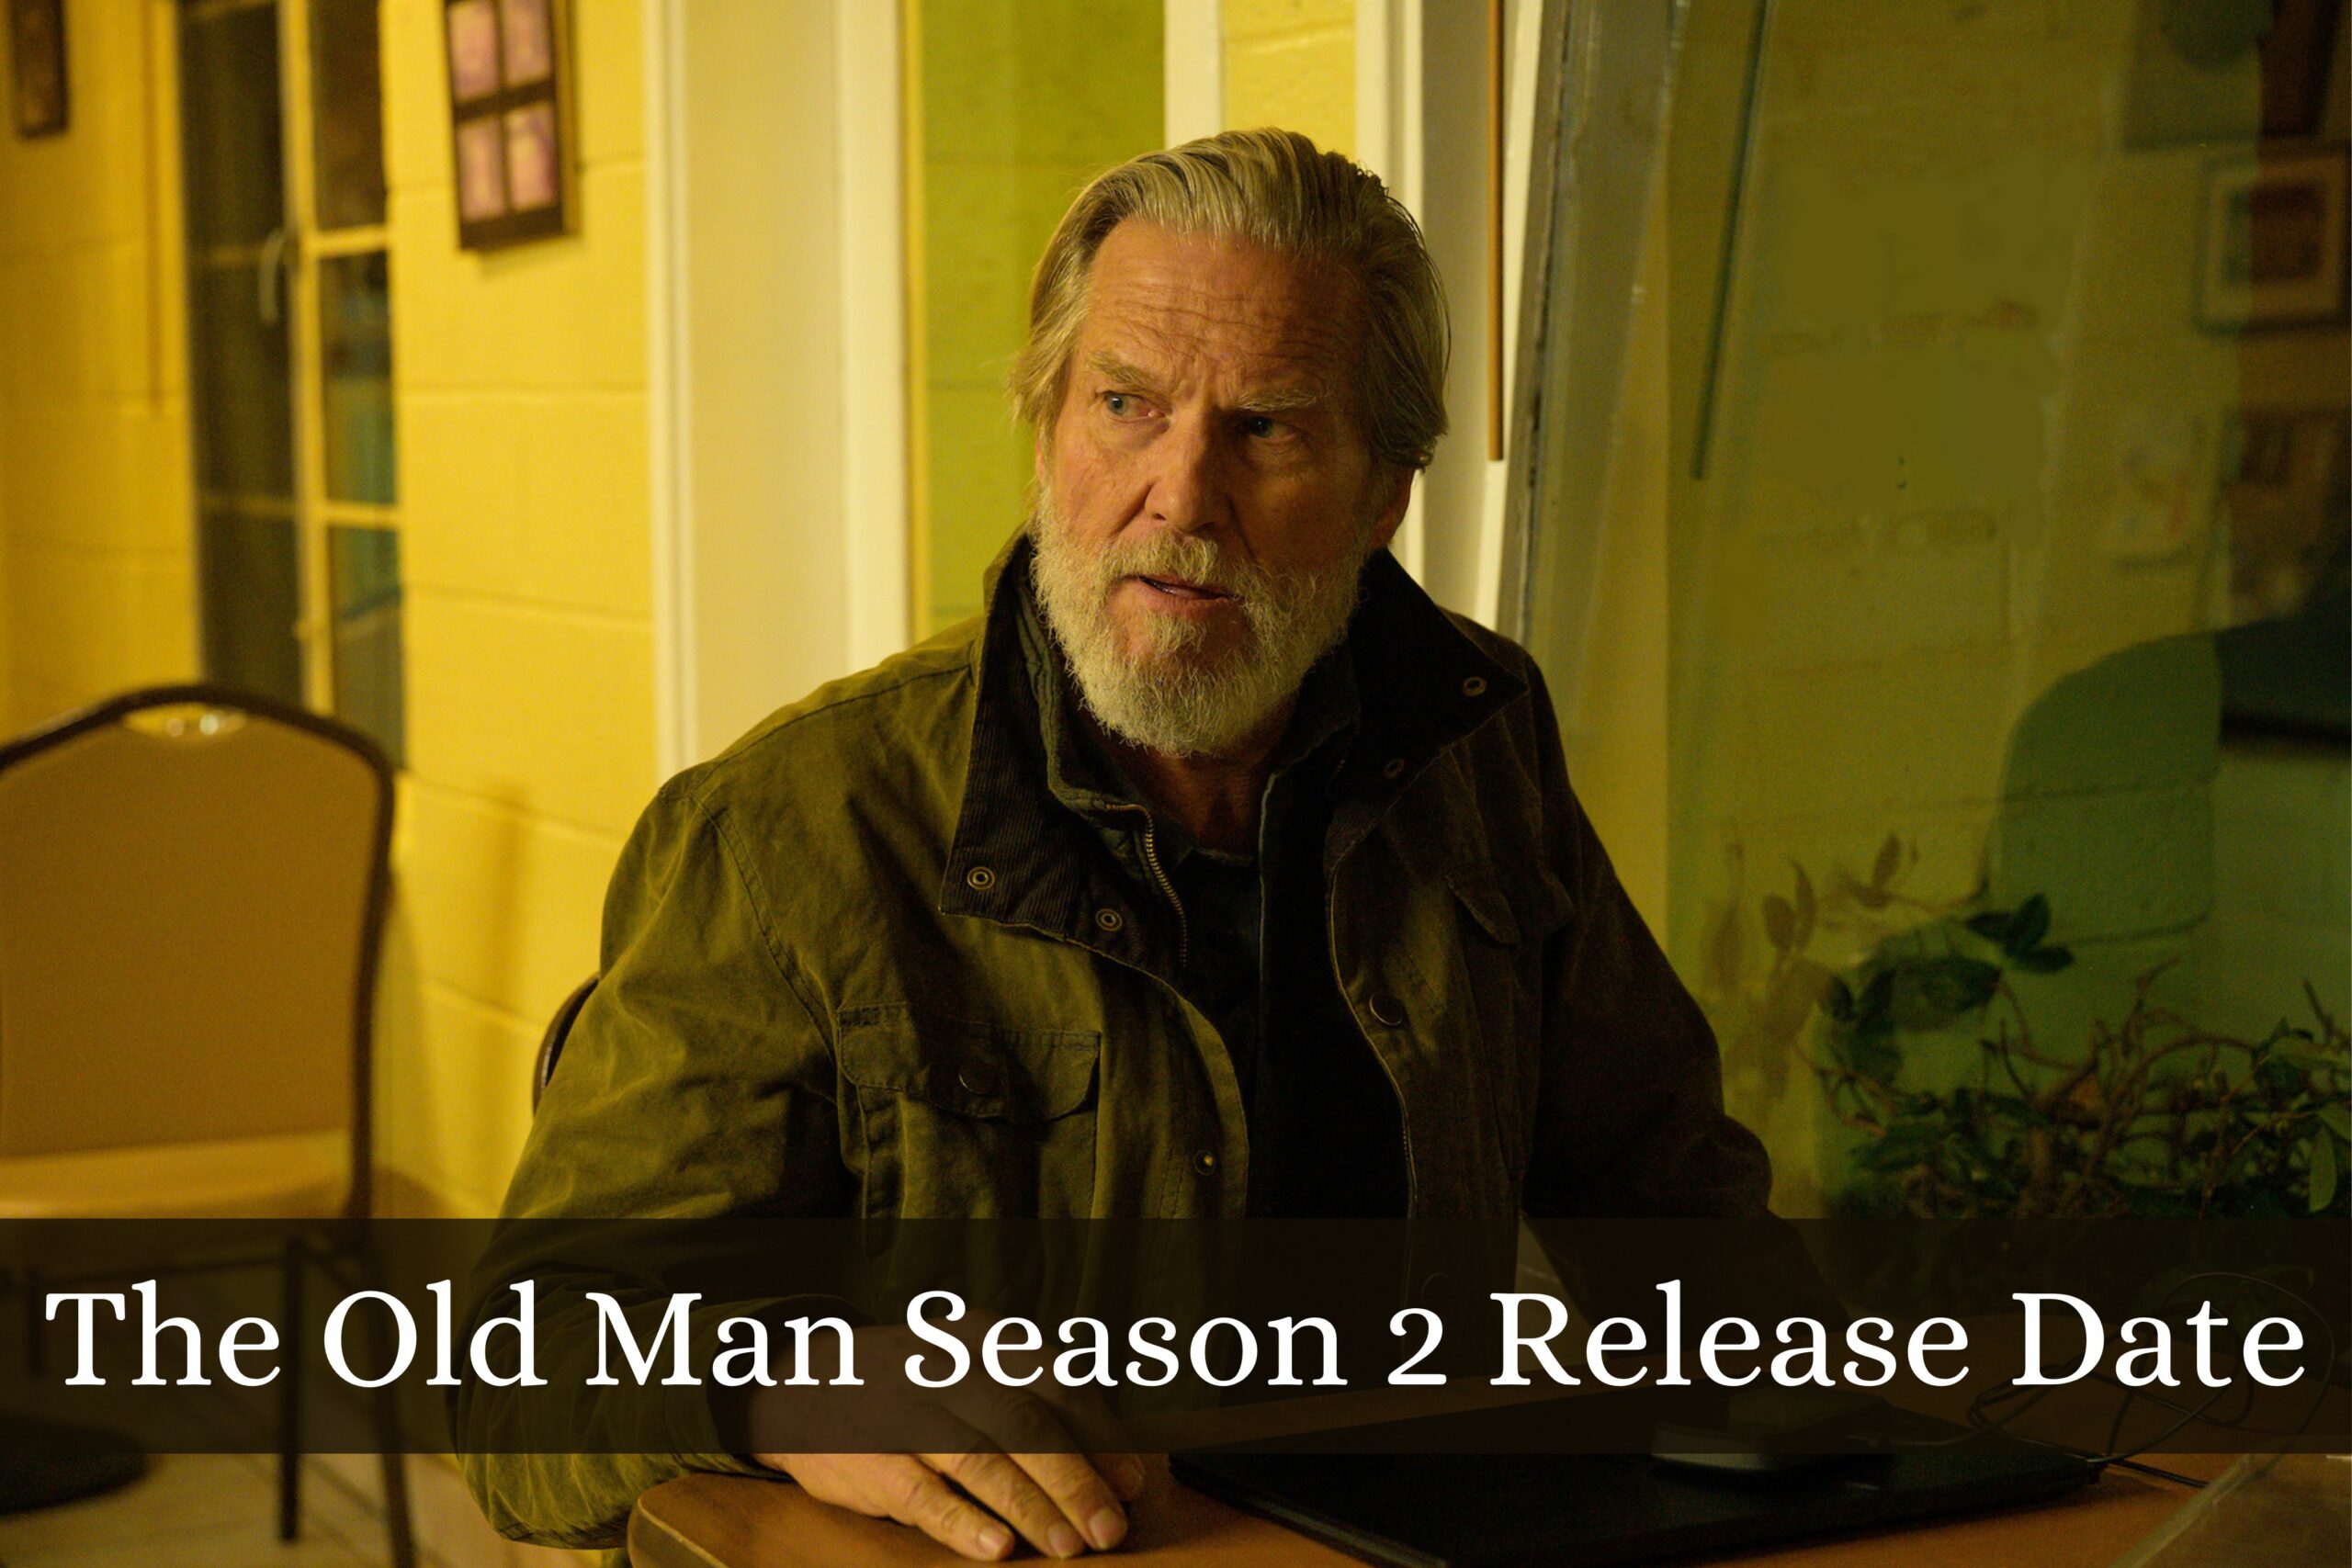 The Old Man Season 2